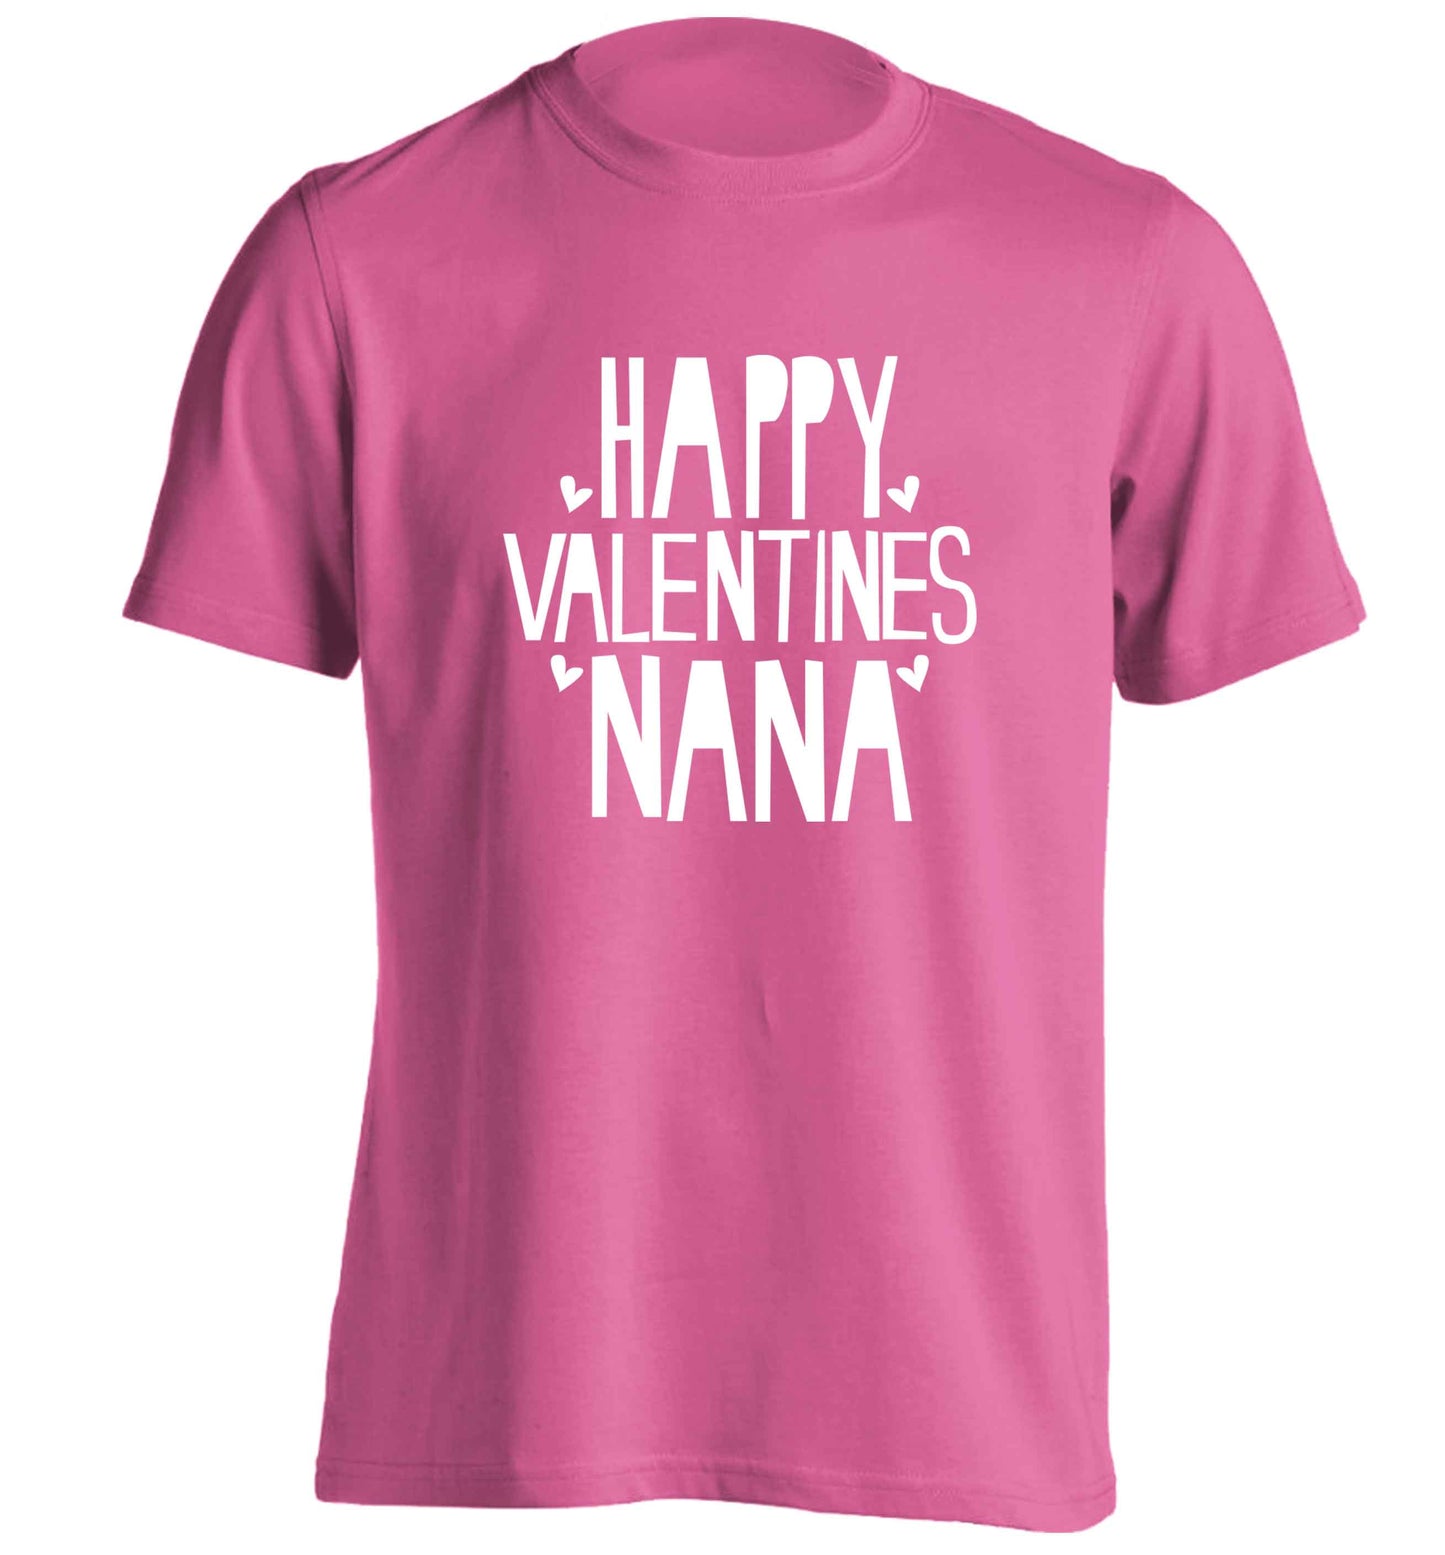 Happy valentines nana adults unisex pink Tshirt 2XL